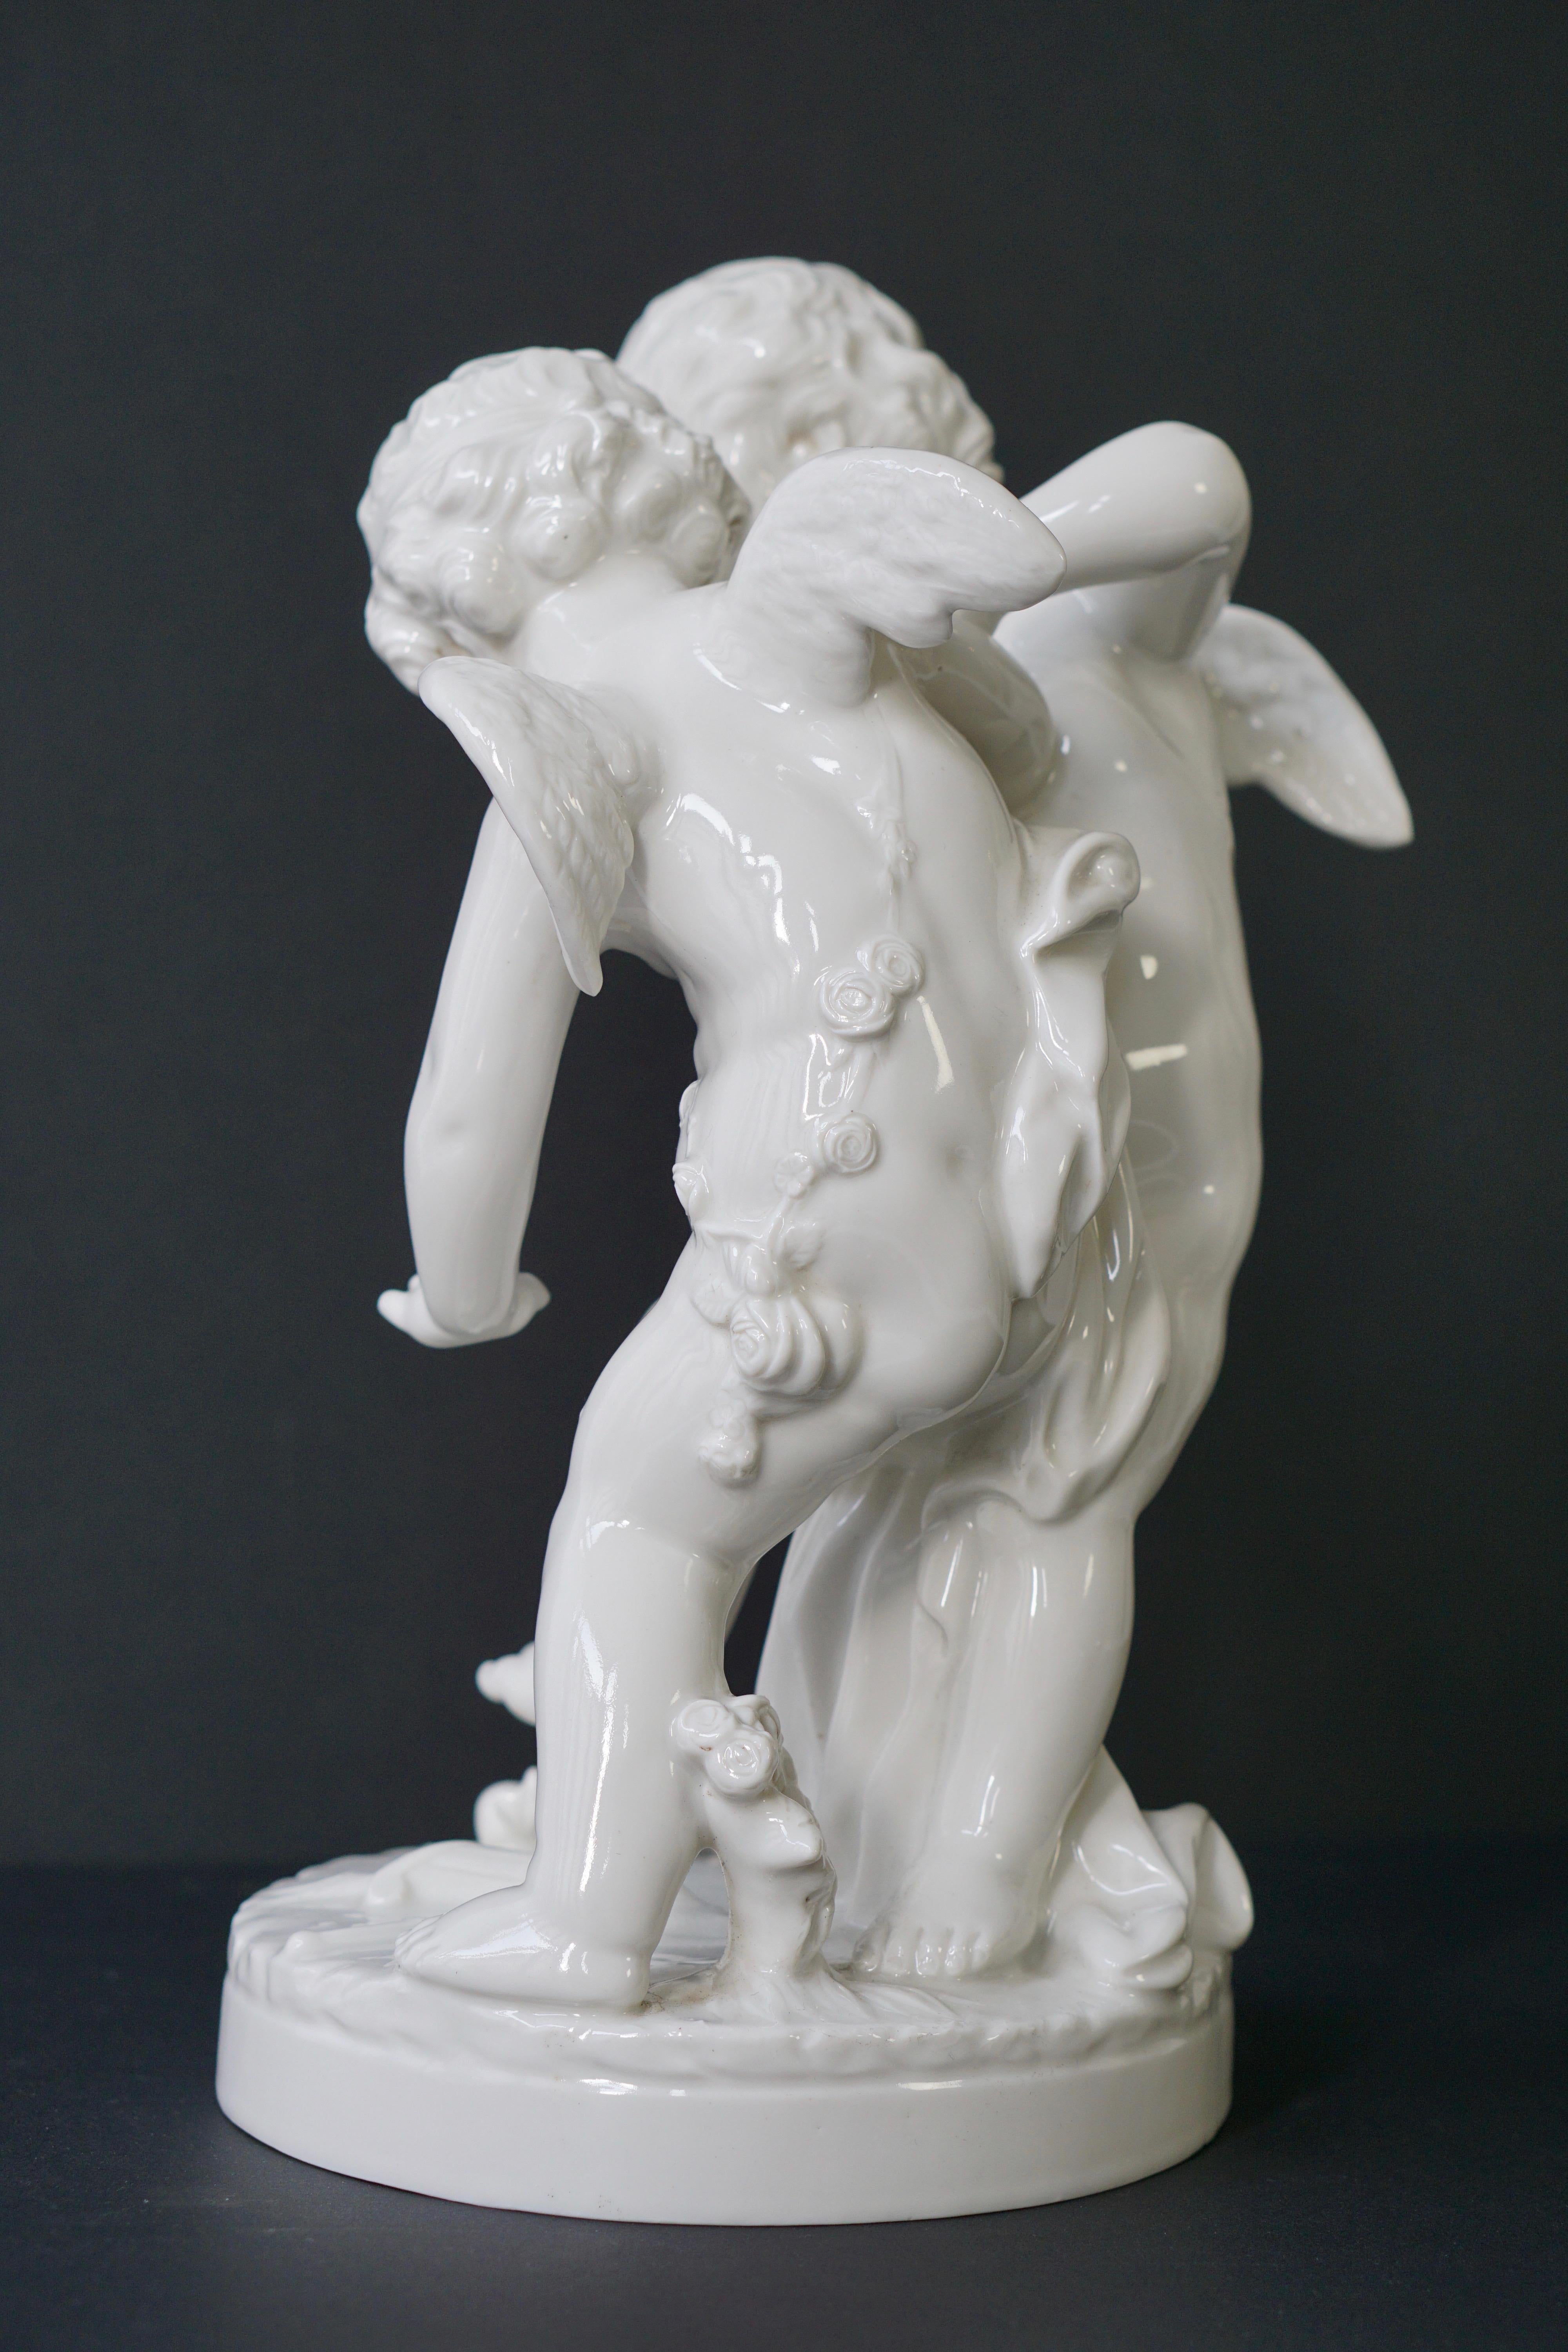 European  Porcelain Figurative Sculpture Representing Two Little Angels, Putti For Sale